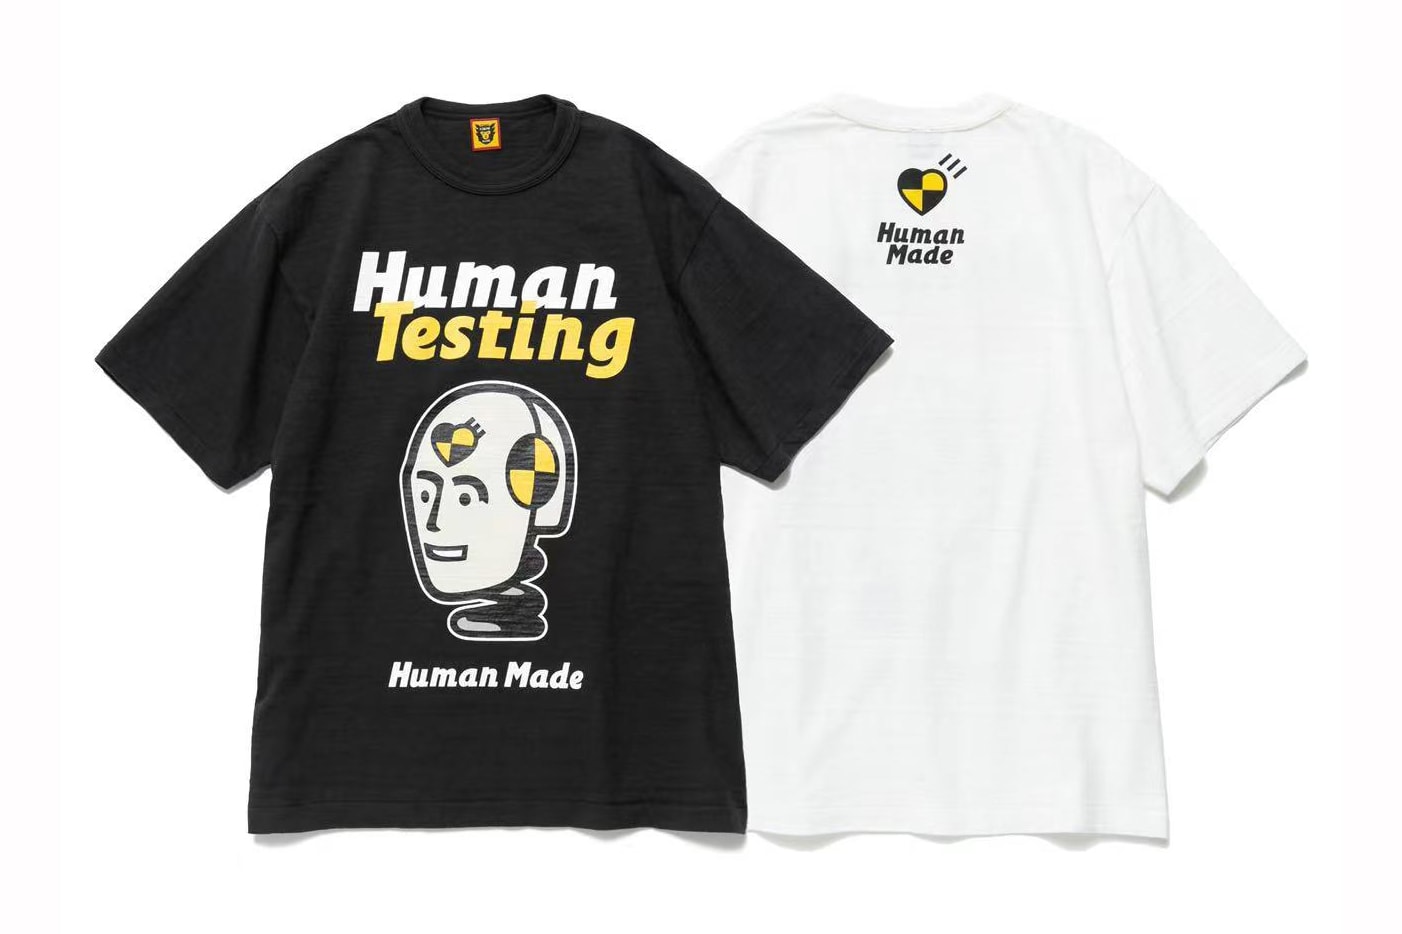 ASAP Rocky x HUMAN MADE 全新「Human Testing」联名系列发售信息公布